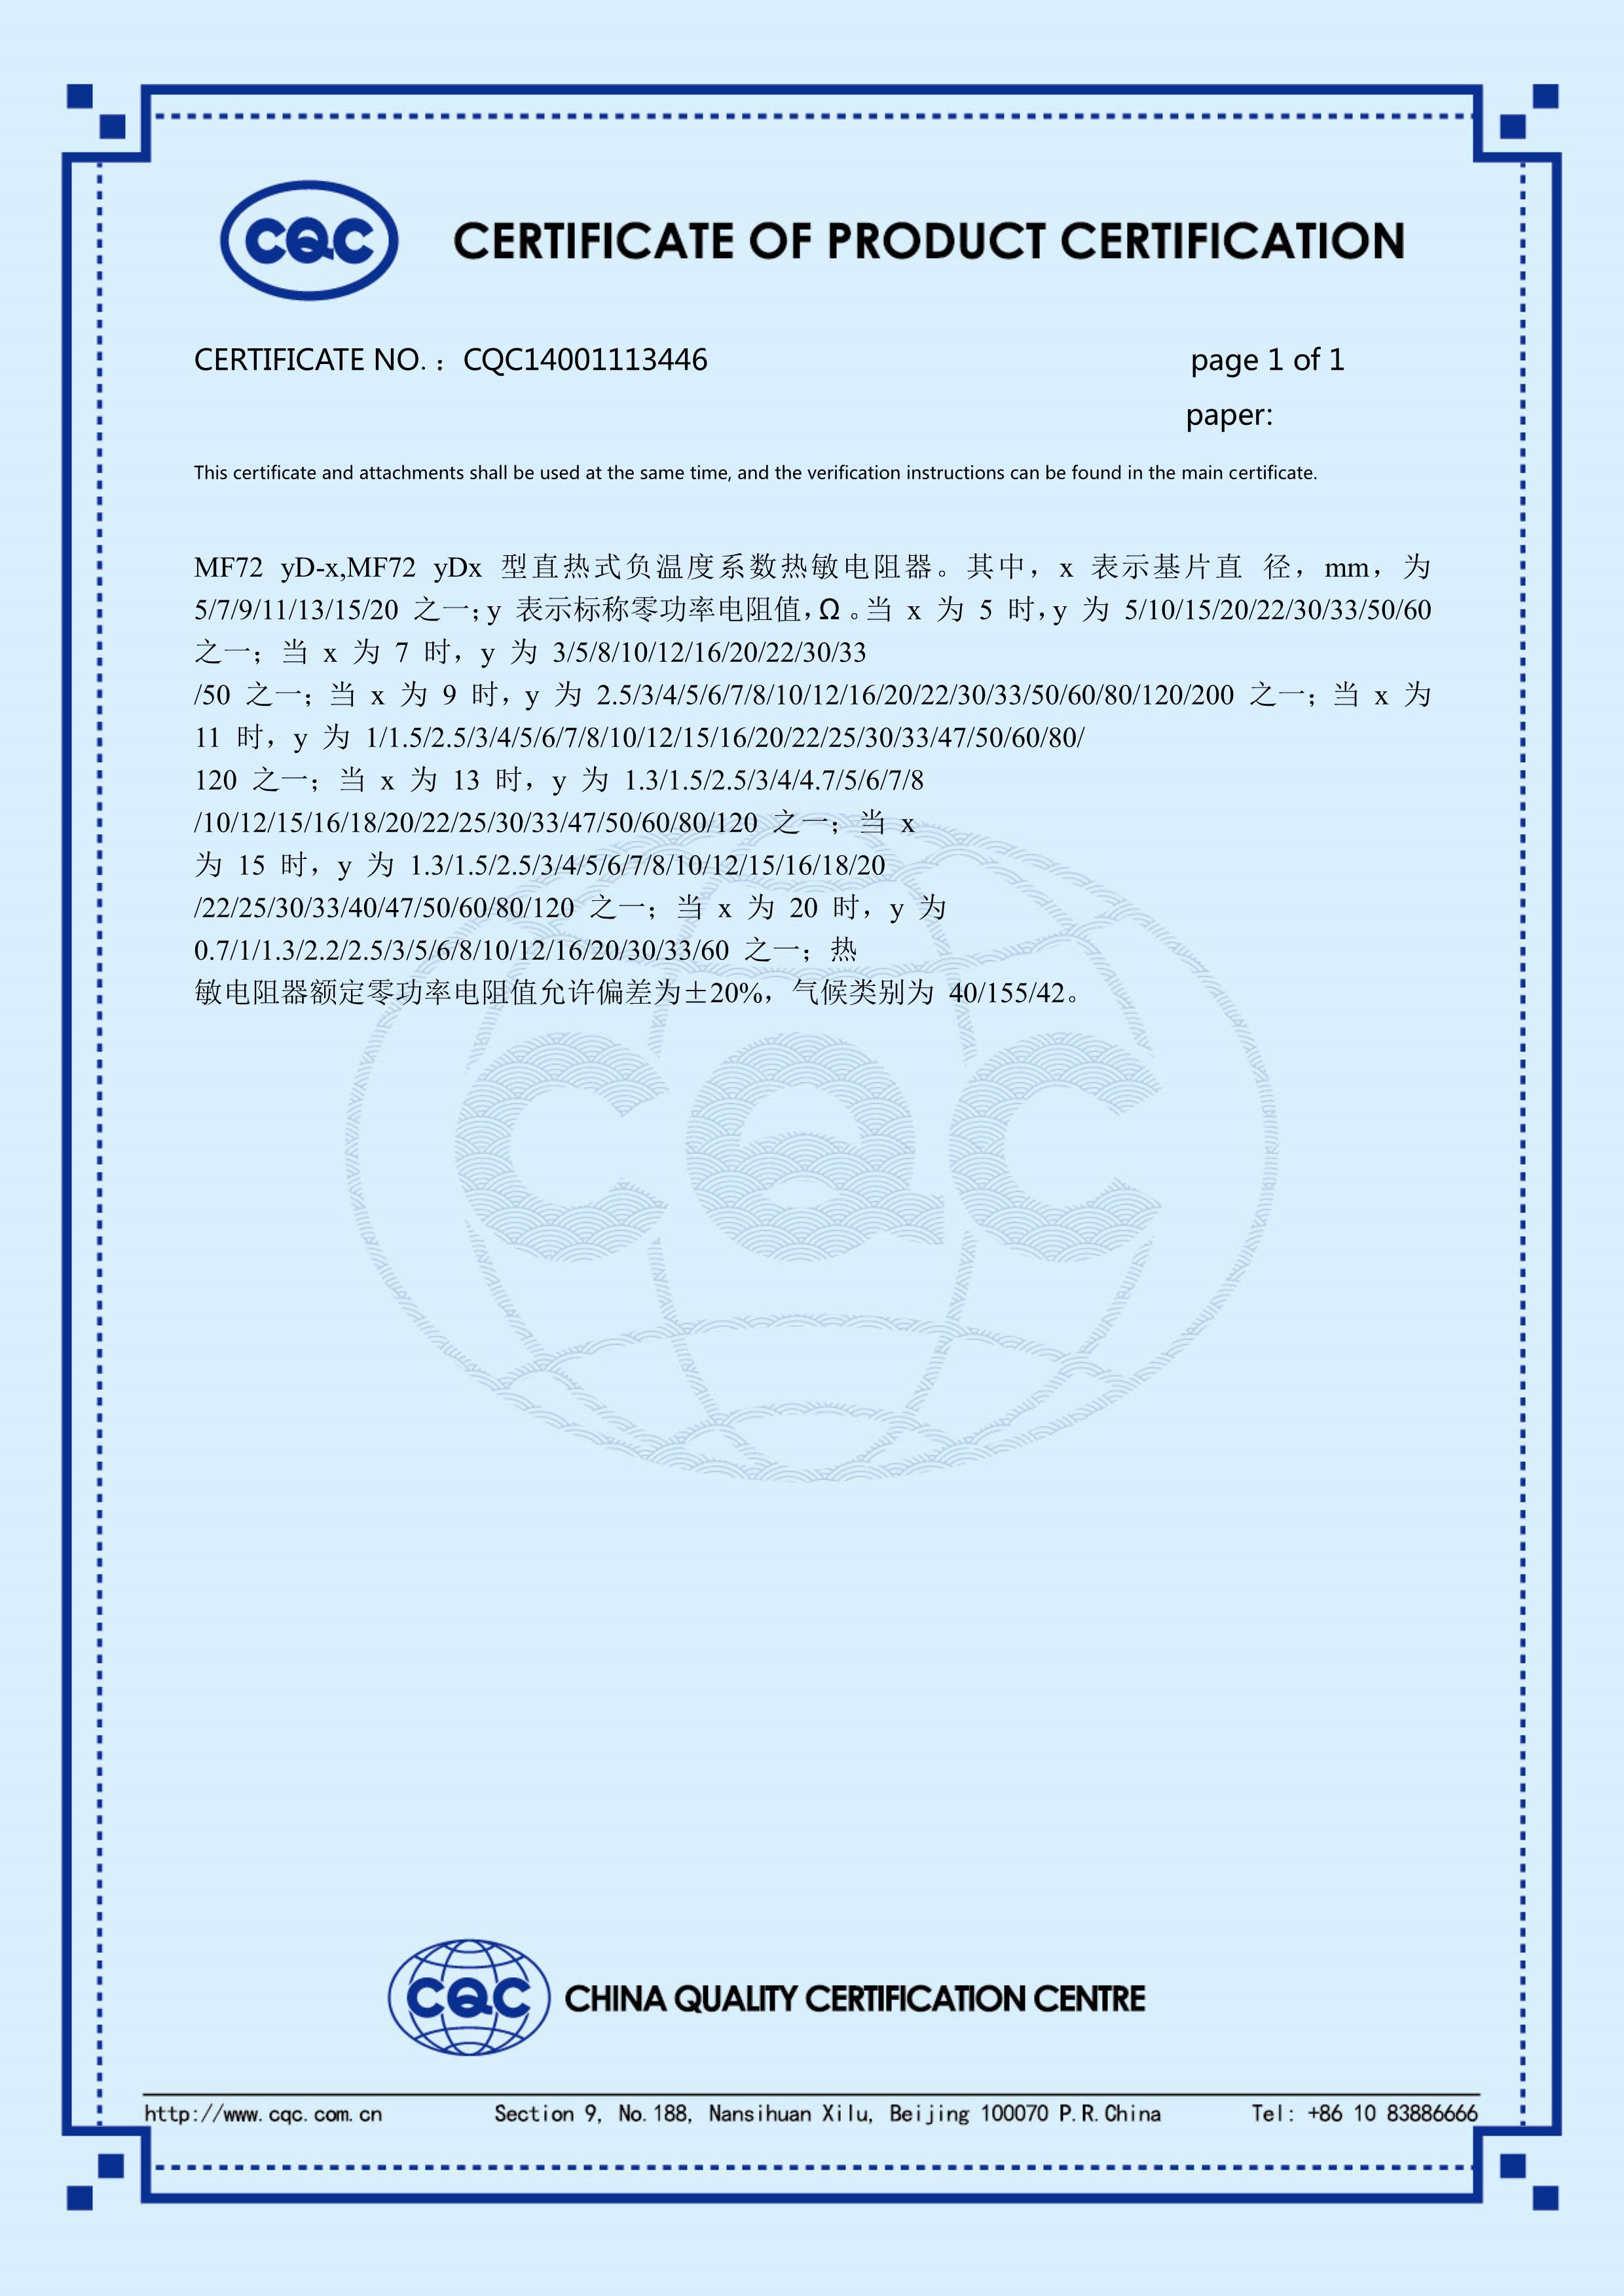 Thermal NTC certificate 4